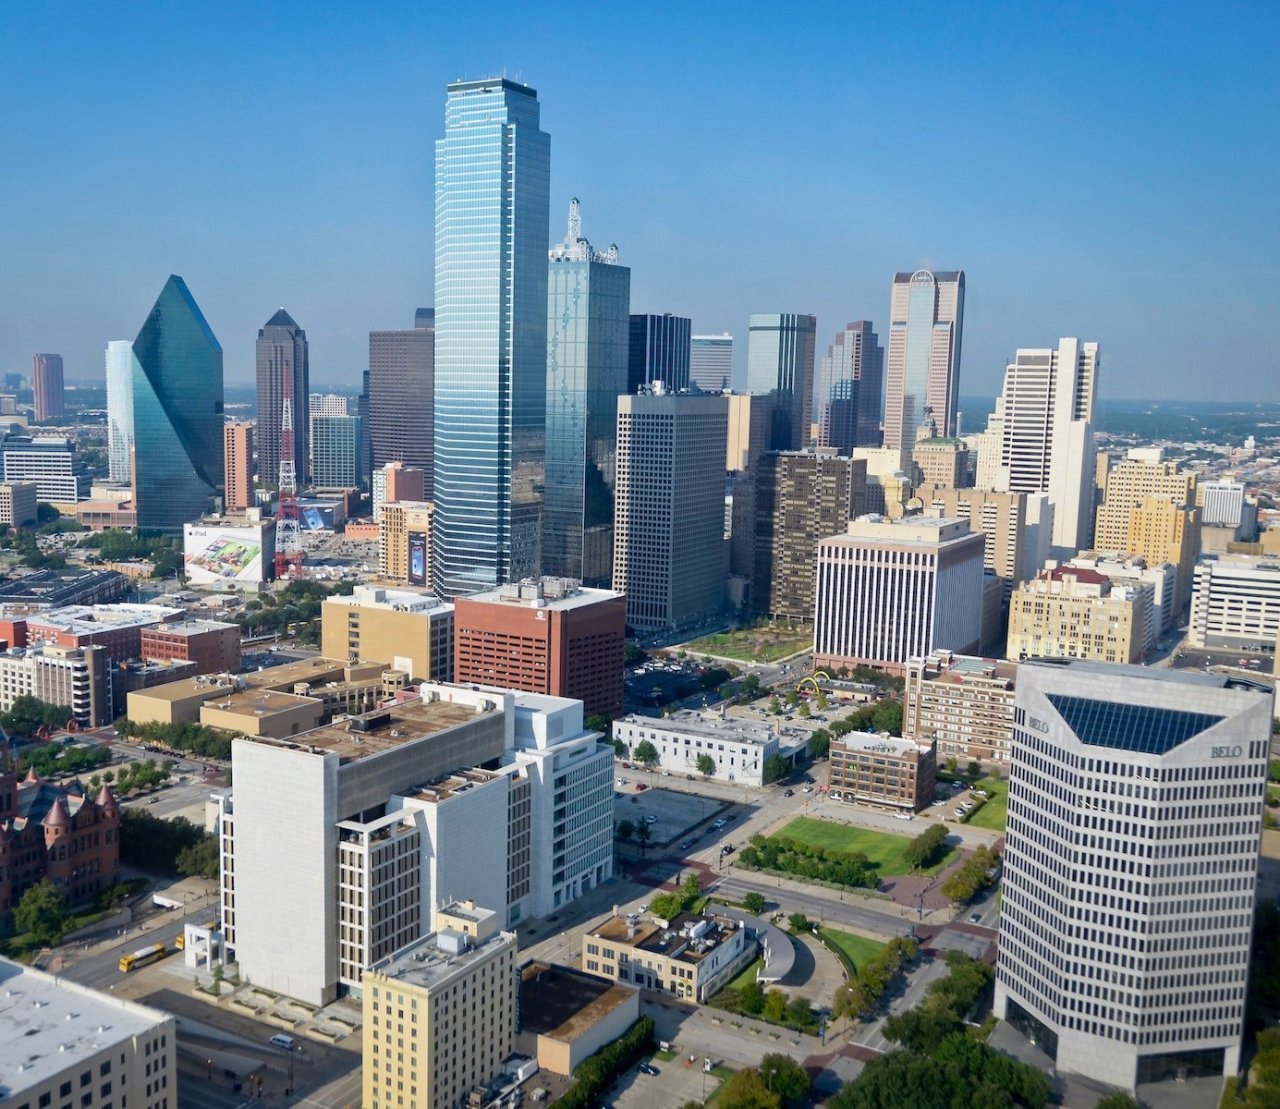 City skyline of Dallas, Texas on a clear, sunny day.